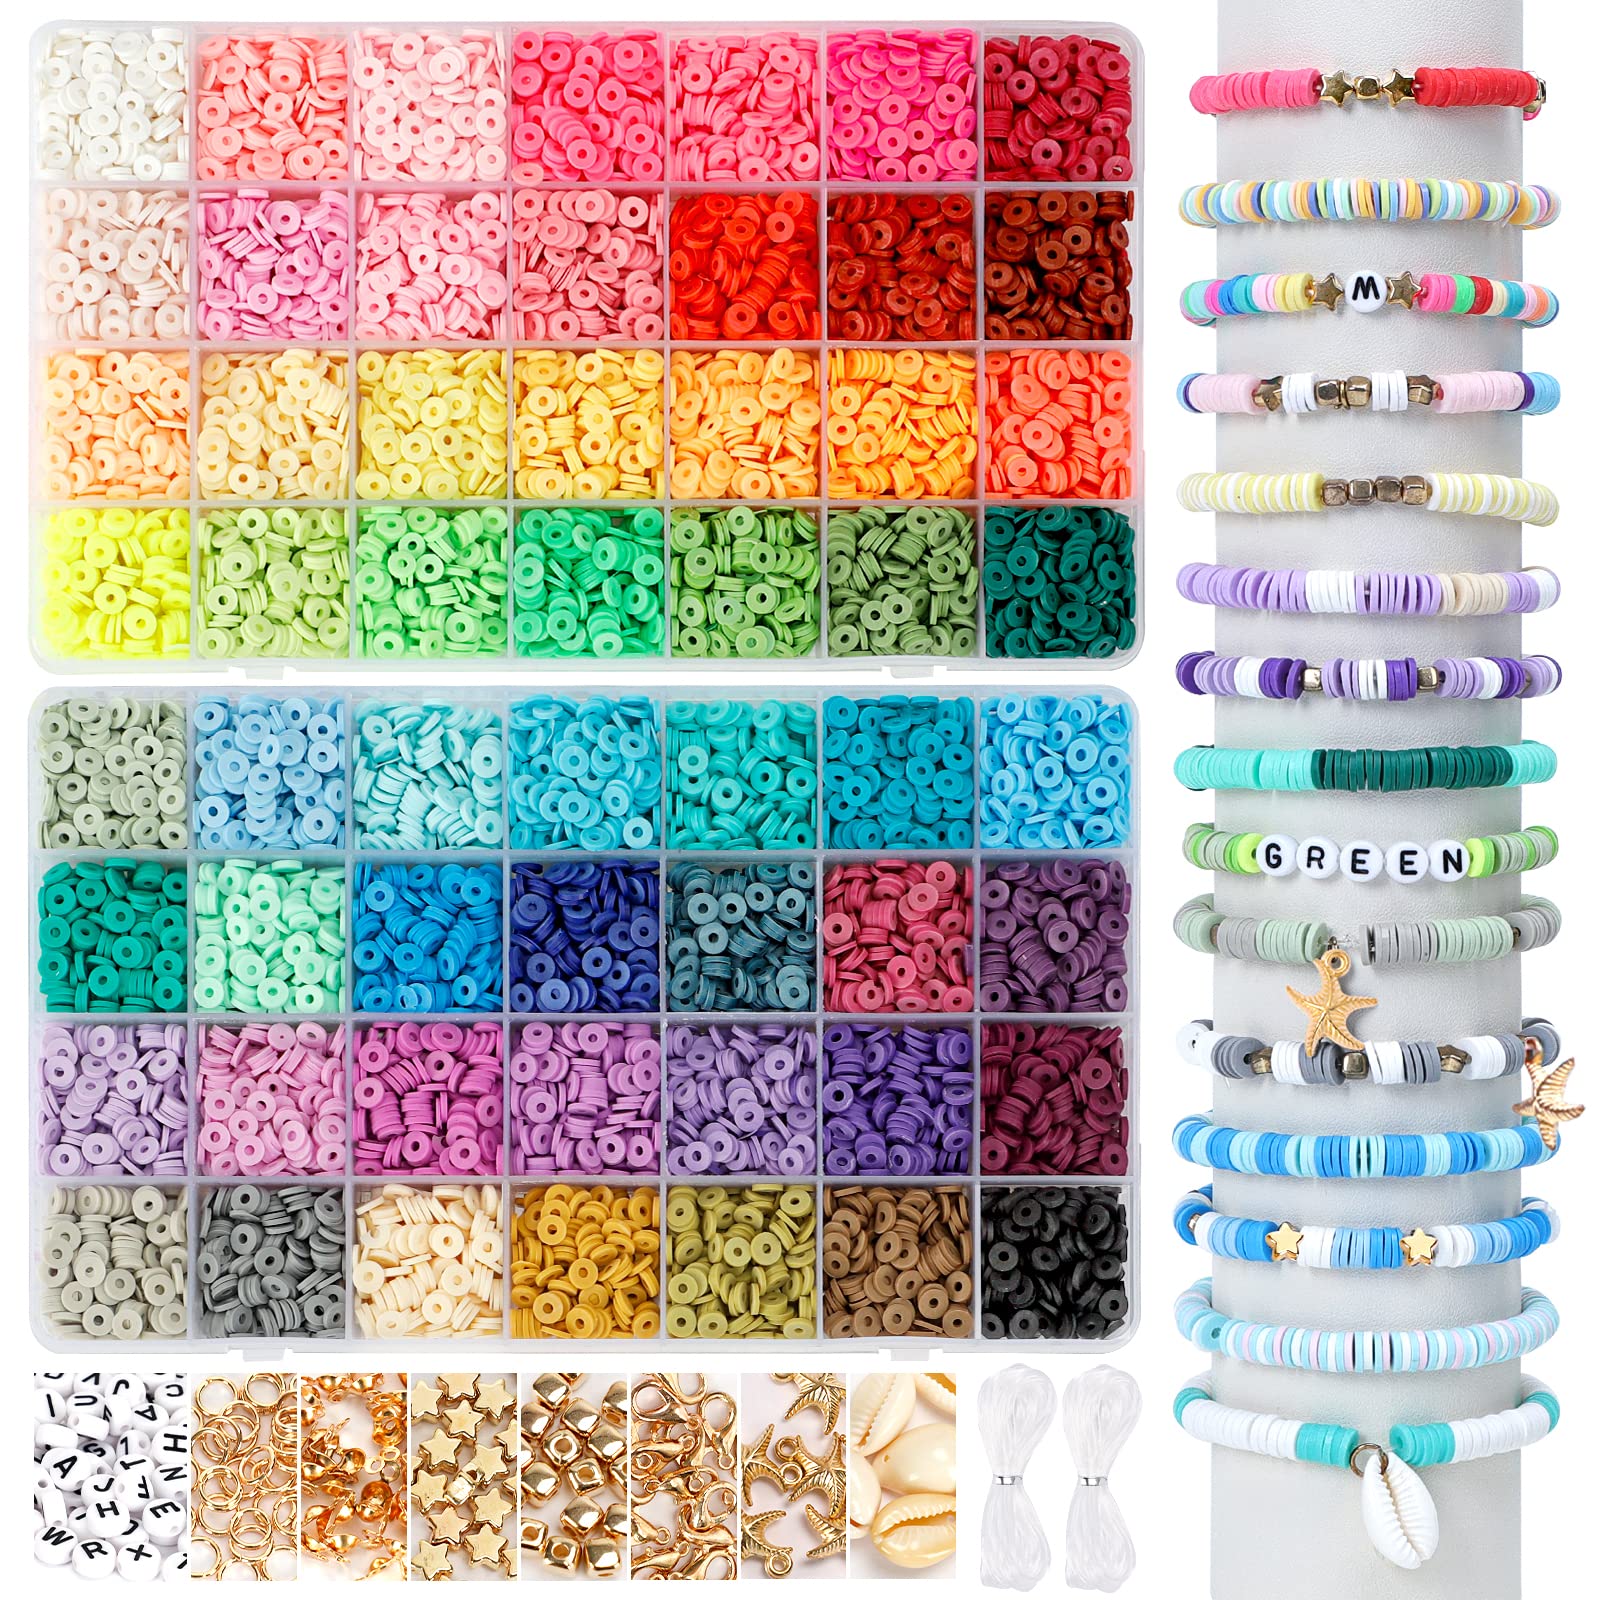 Polymer Clay Beads Bracelet Kit: 20 Colors Flat Germany